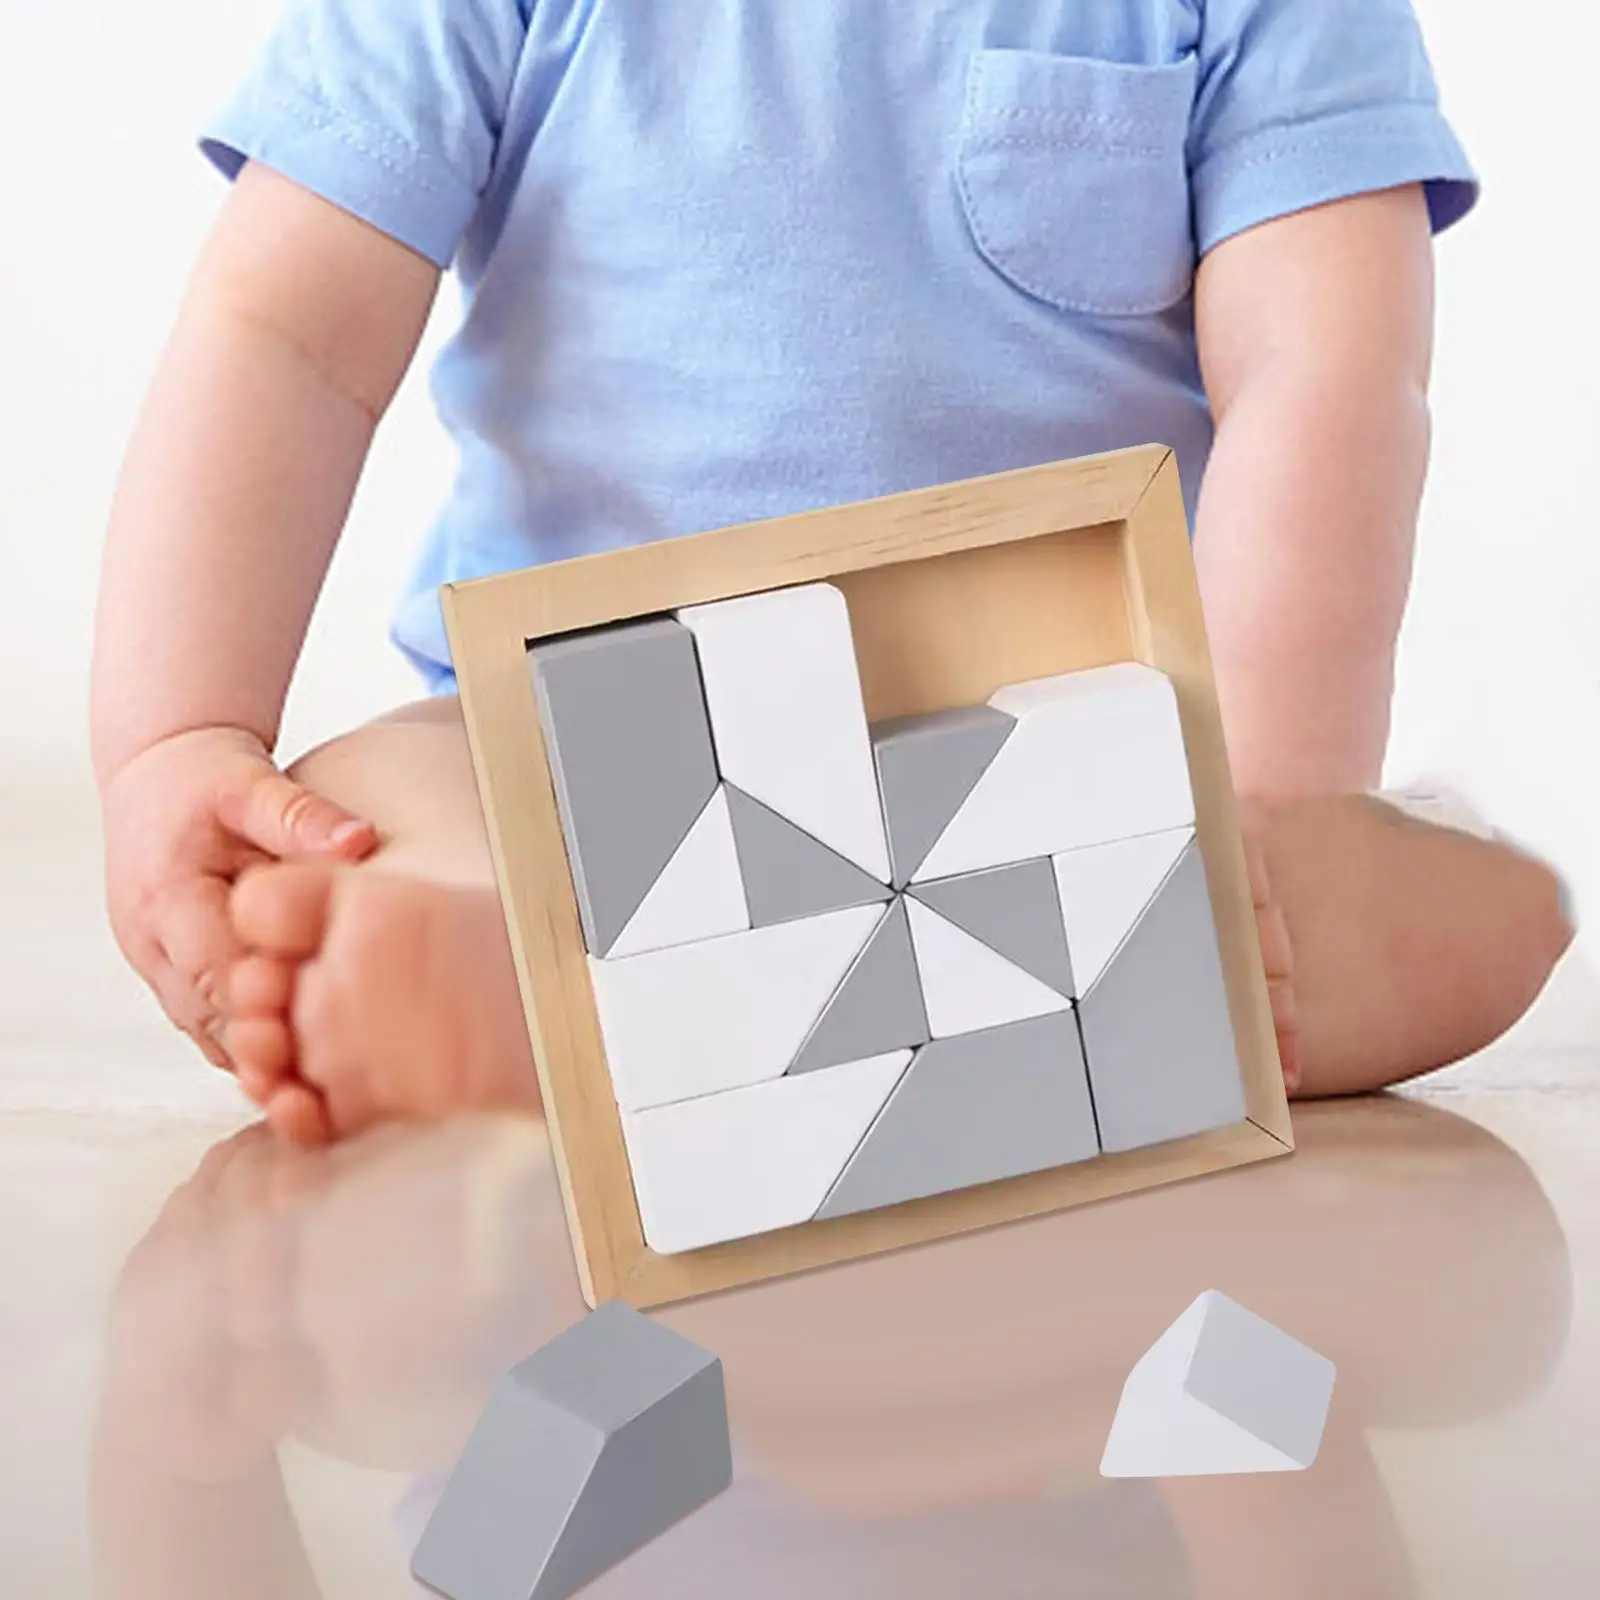 

Wooden Blocks Puzzle Early Learning Holiday Gifts Geometric Brain Teaser IQ Game for Children Boys Preschool Kids Kindergarten